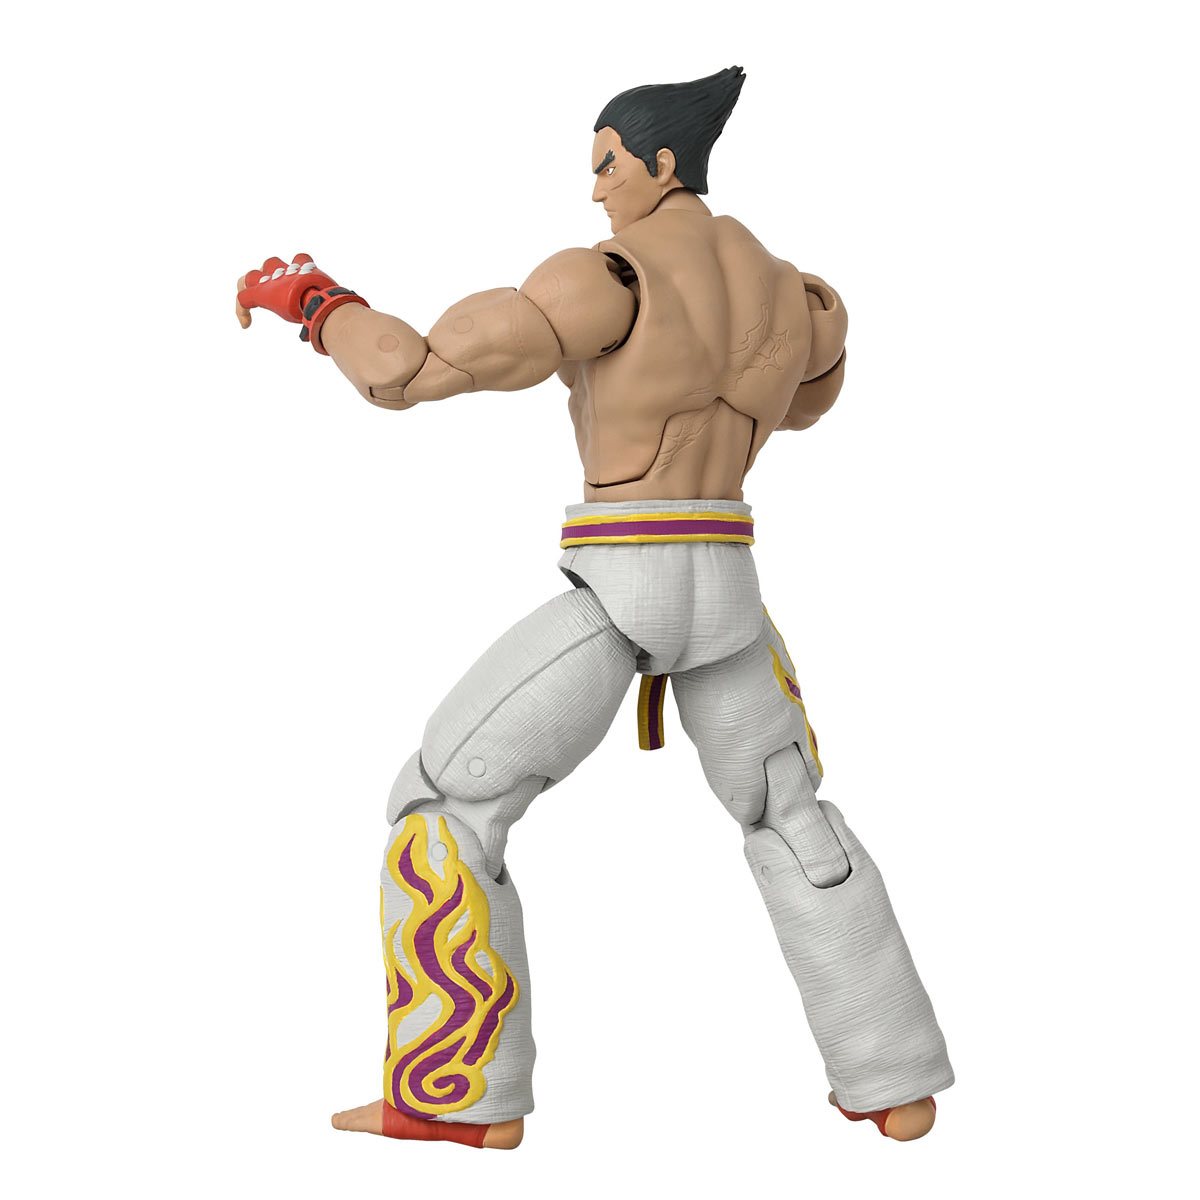 Storm Toys Tekken 7 Kazuya Mishima 7 Figure Official Collectible In Stock